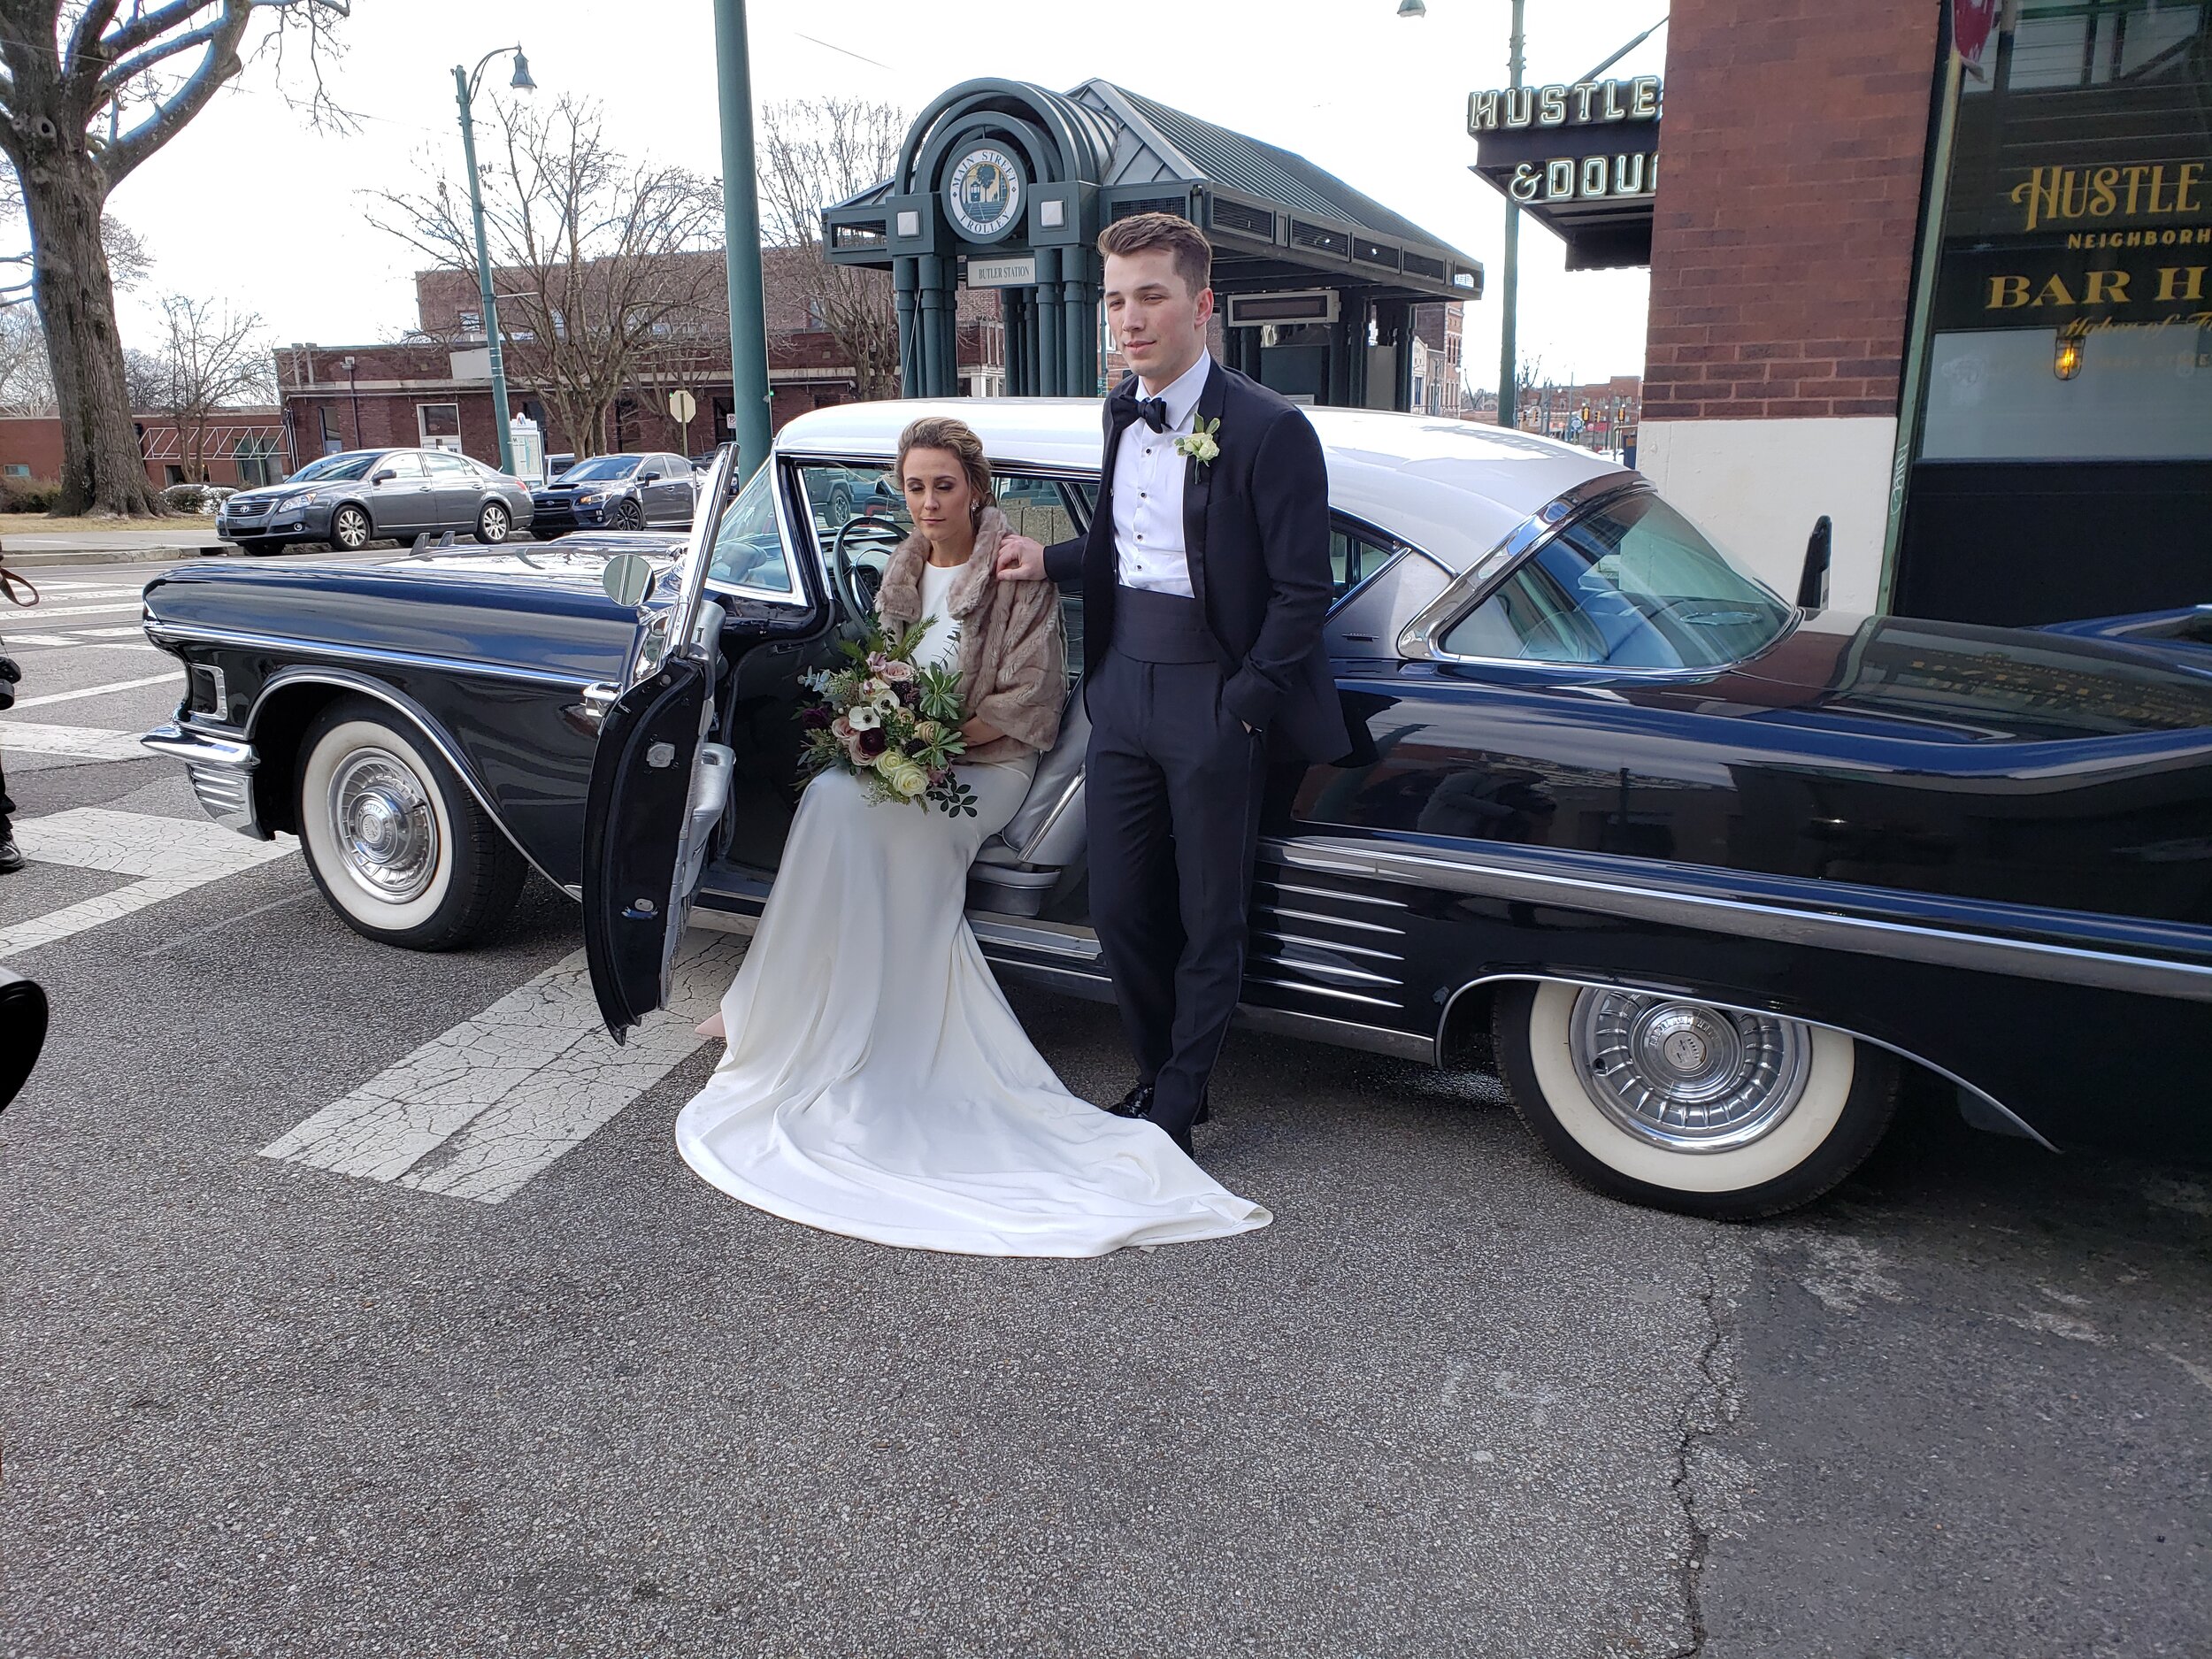 1958 Cadillac bride & Groom.jpg